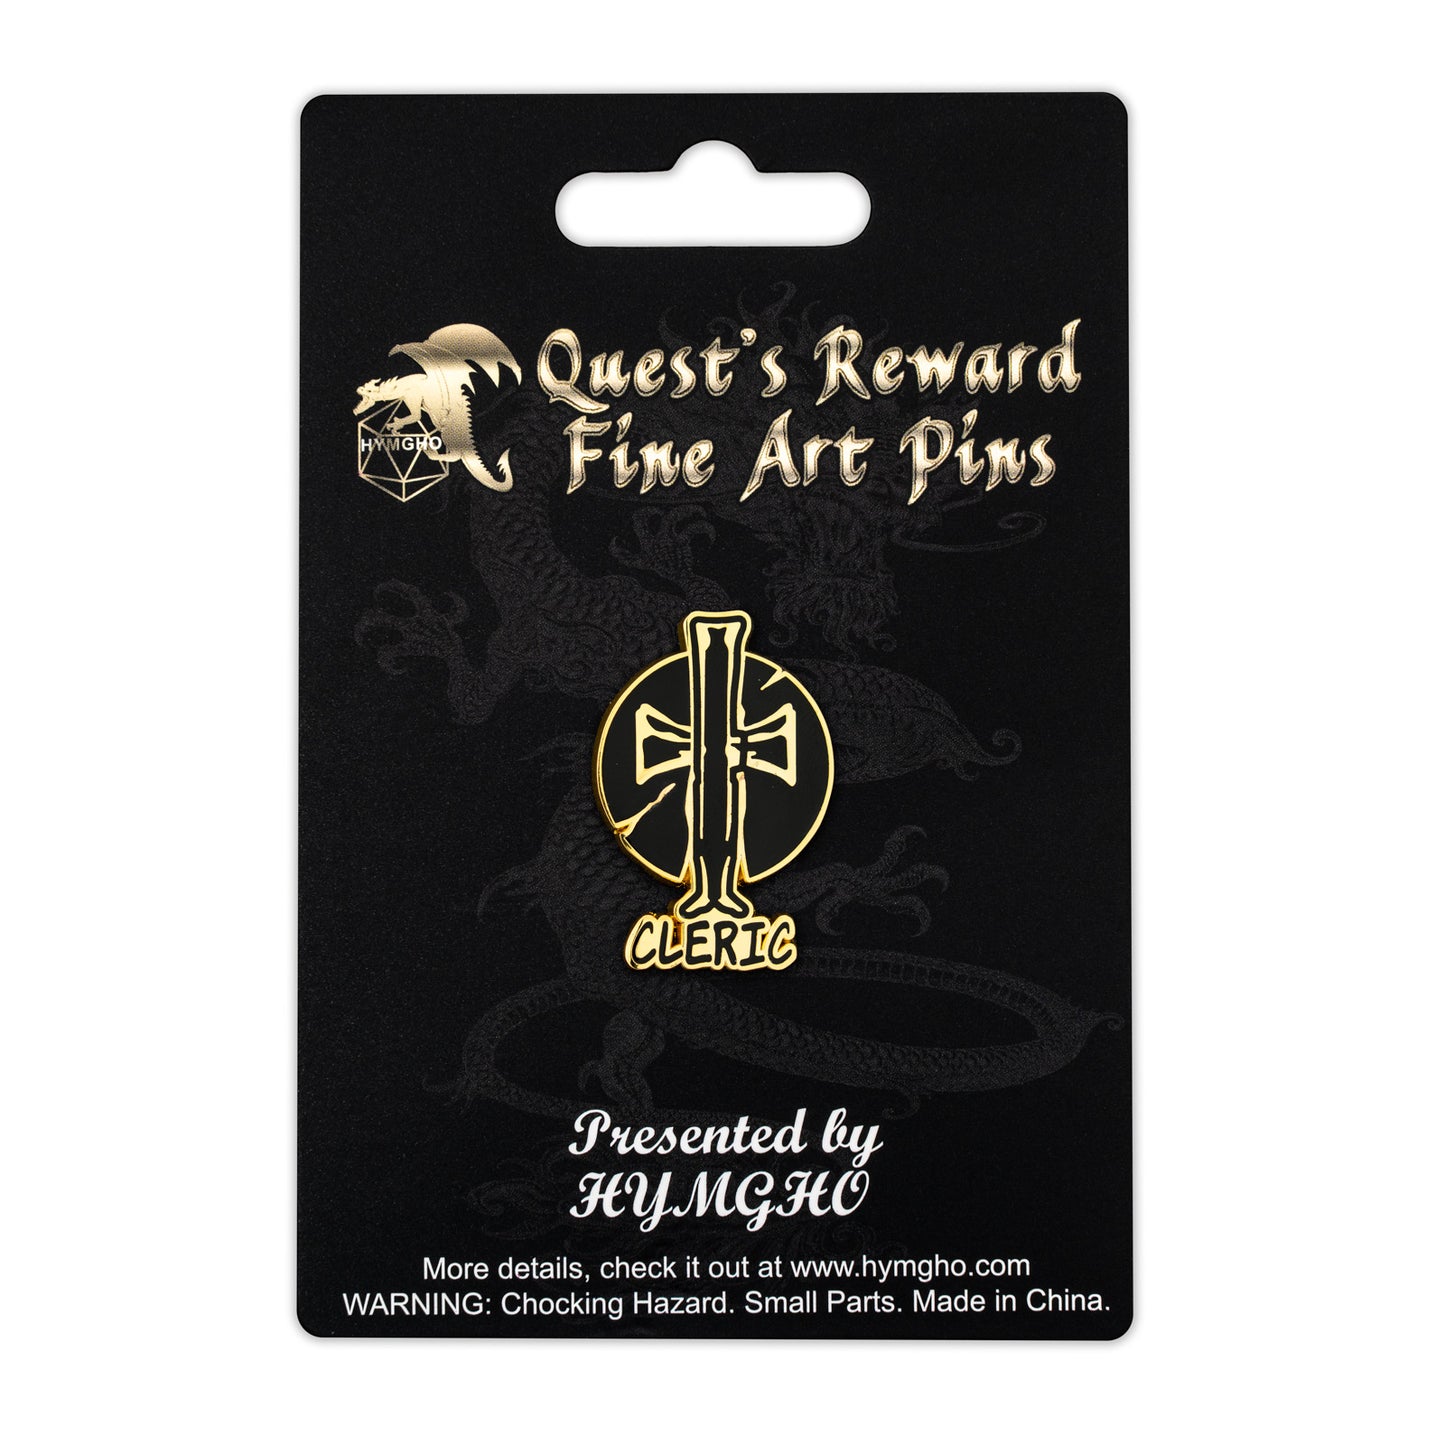 Quest's Reward Fine Art Class Pins: CLERIC